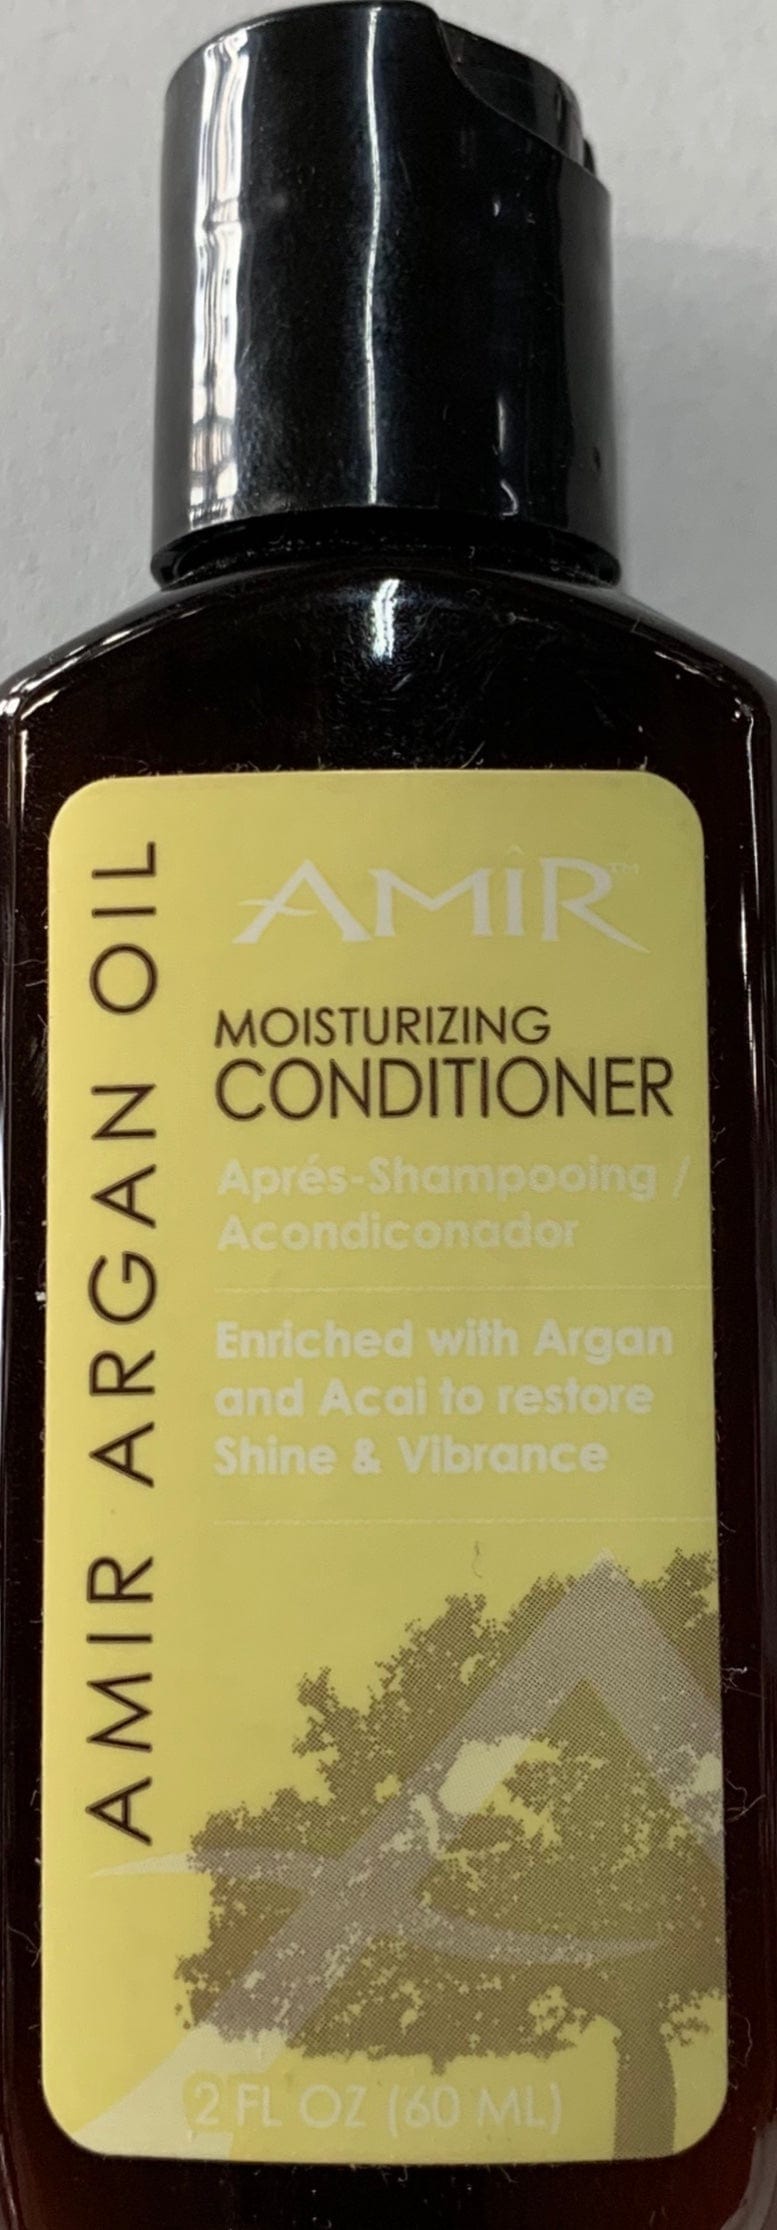 Argan Oil Moisturizing Conditioner 12oz Conditioners